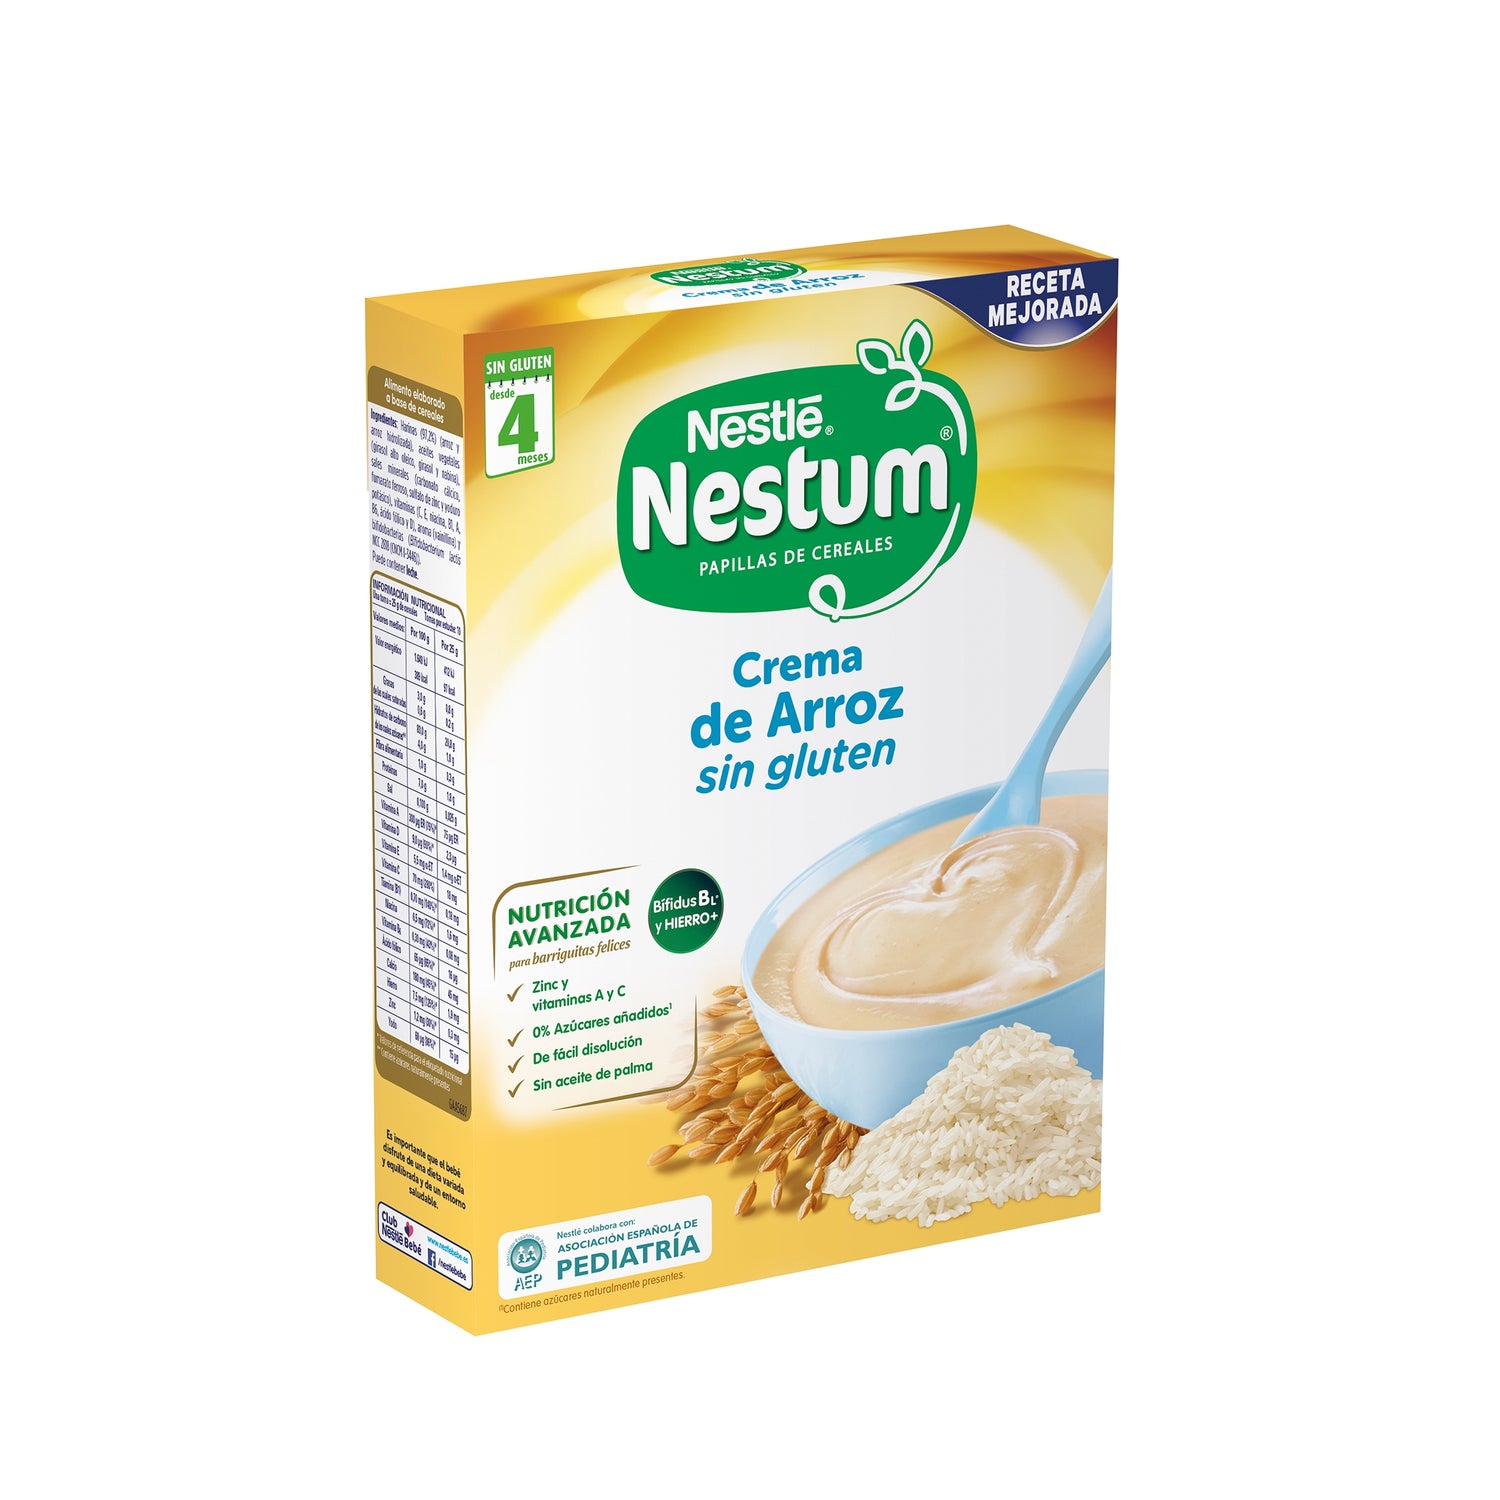 Nestlé Nestum Crema de Arroz 250g | PromoFarma